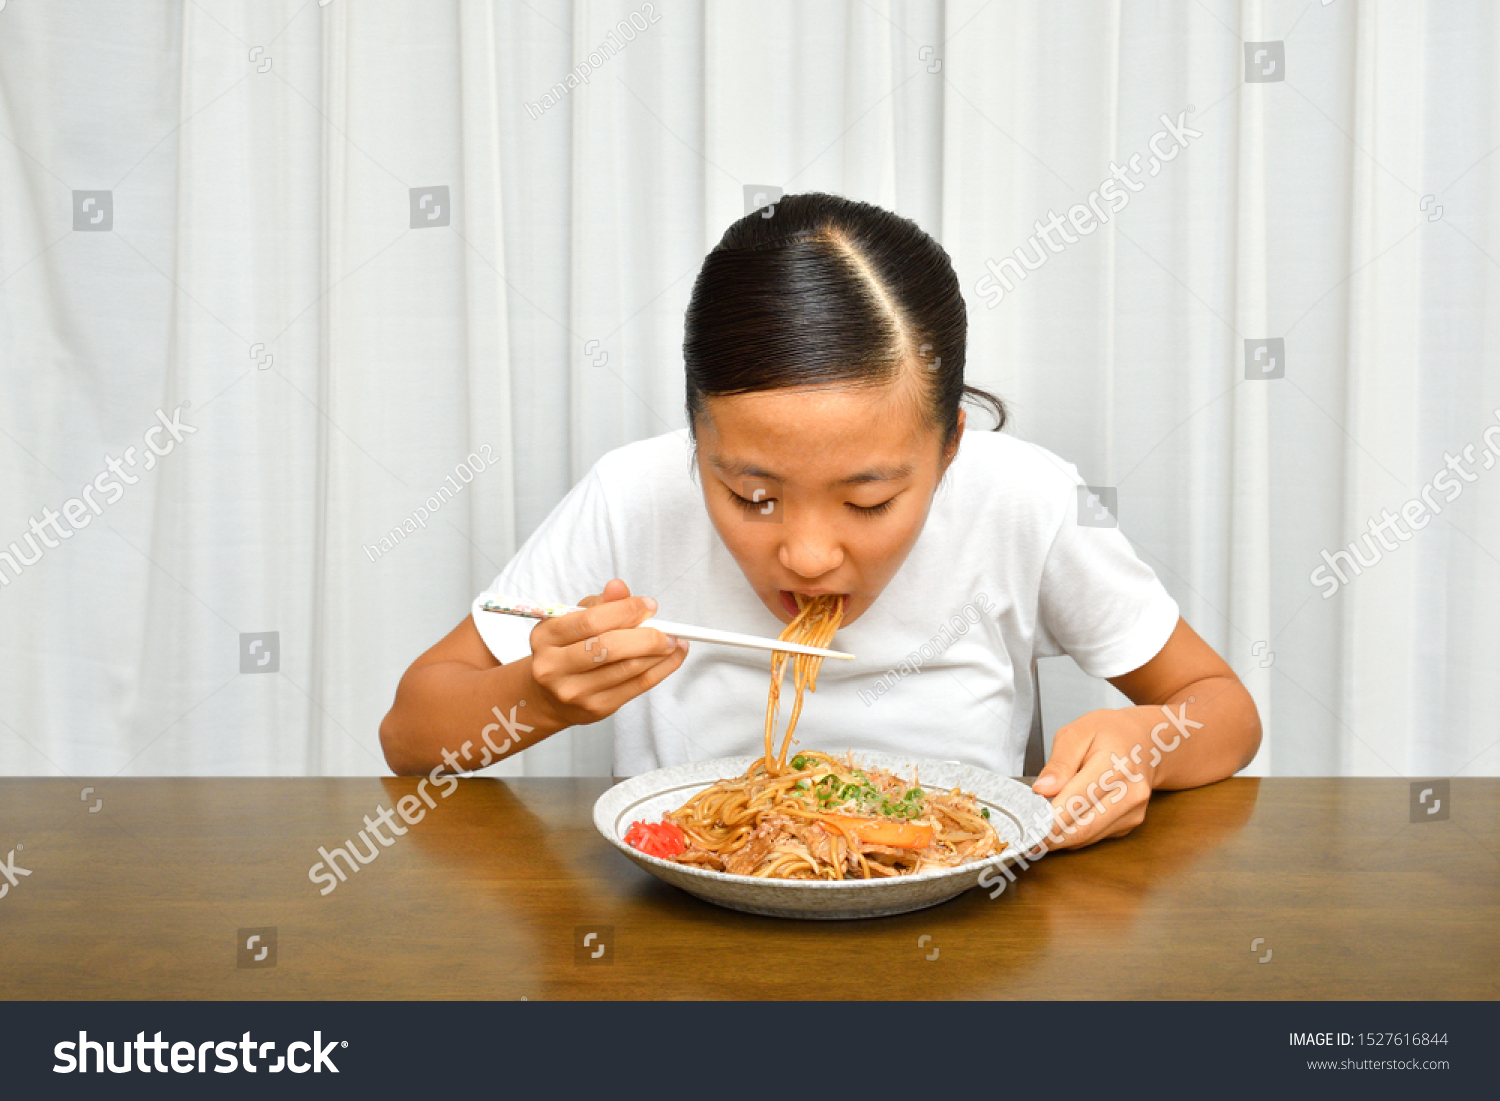 christian tittle share japanese girl eating noodles photos